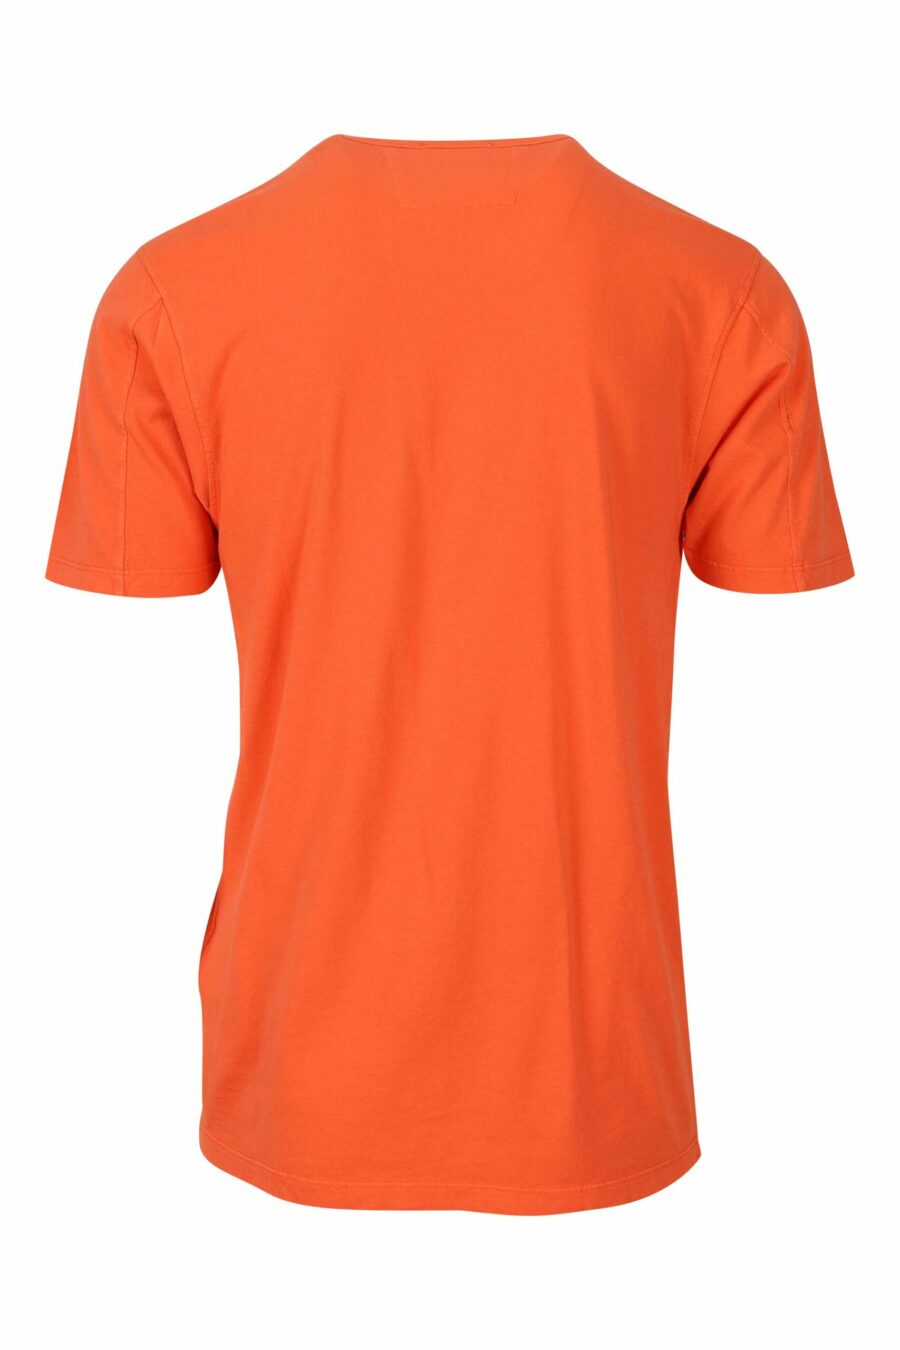 Camiseta naranja con minilogo centrado - 7620943594928 1 1 scaled